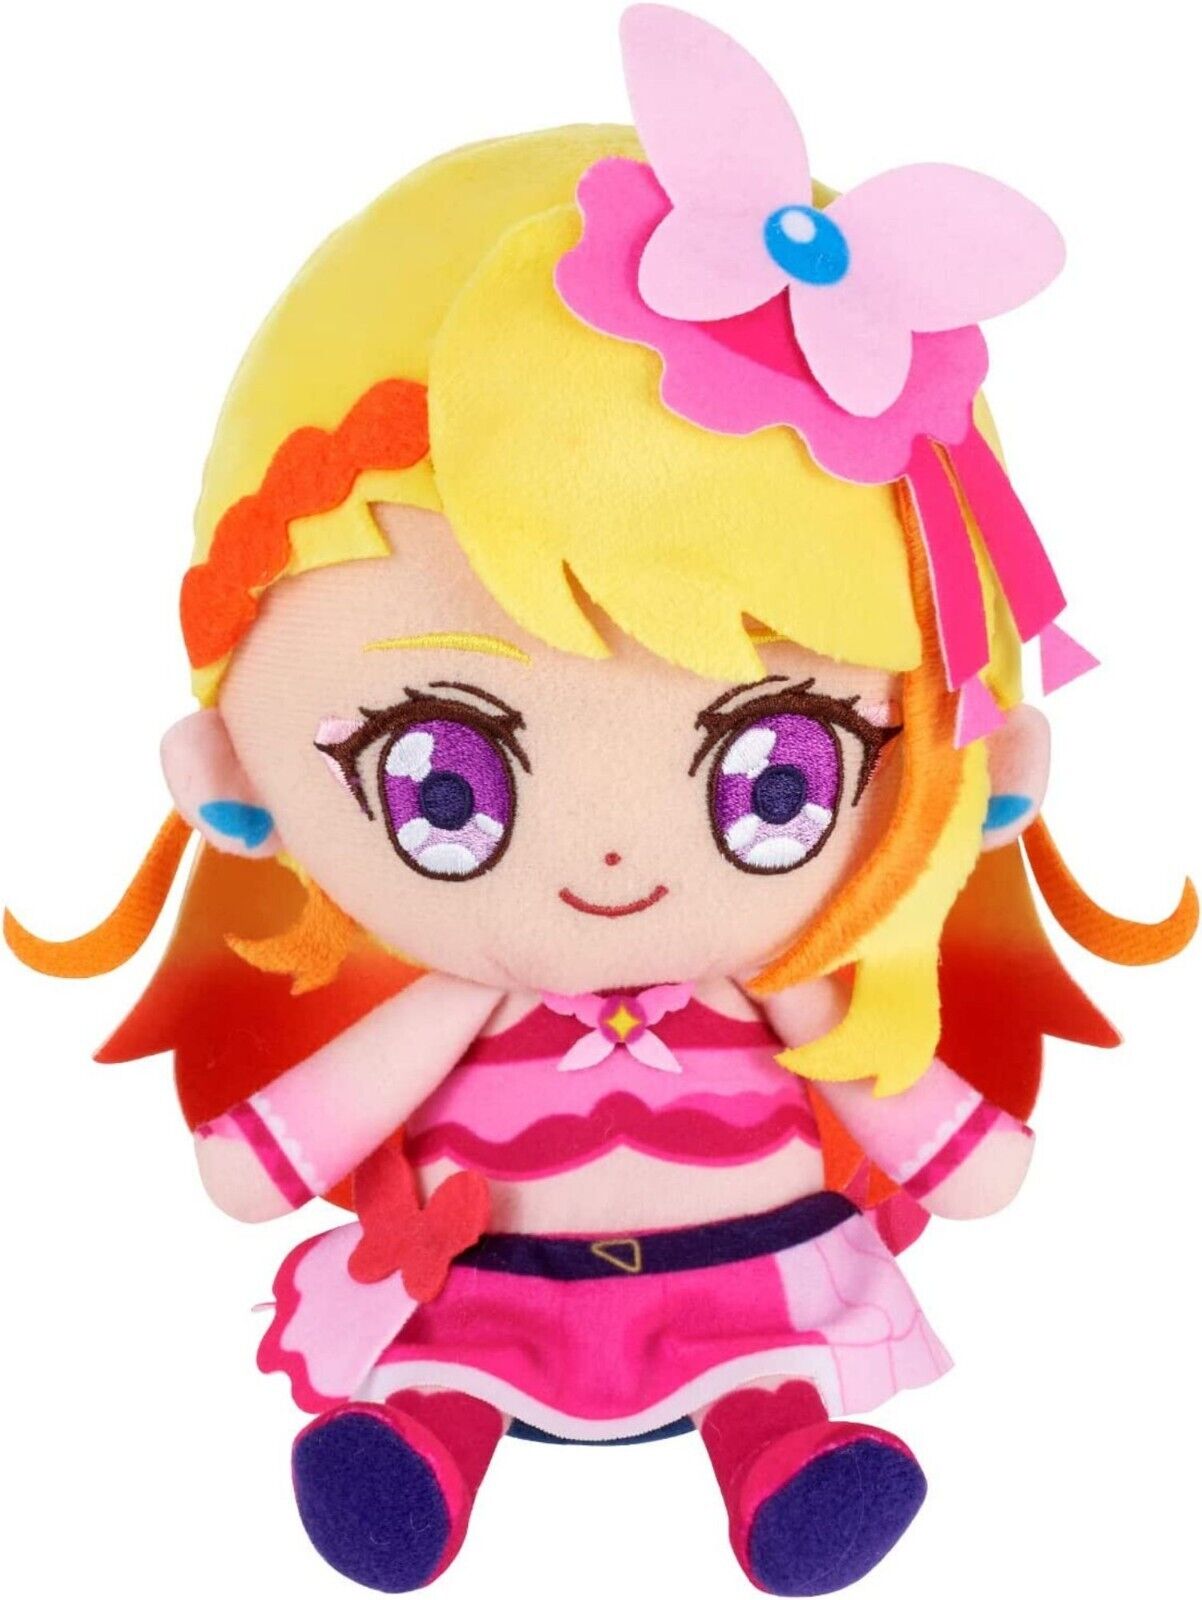 Soaring Sky Precure BANDAI Cure Friends Plush / Cure Butterfly / Girl toy Japan